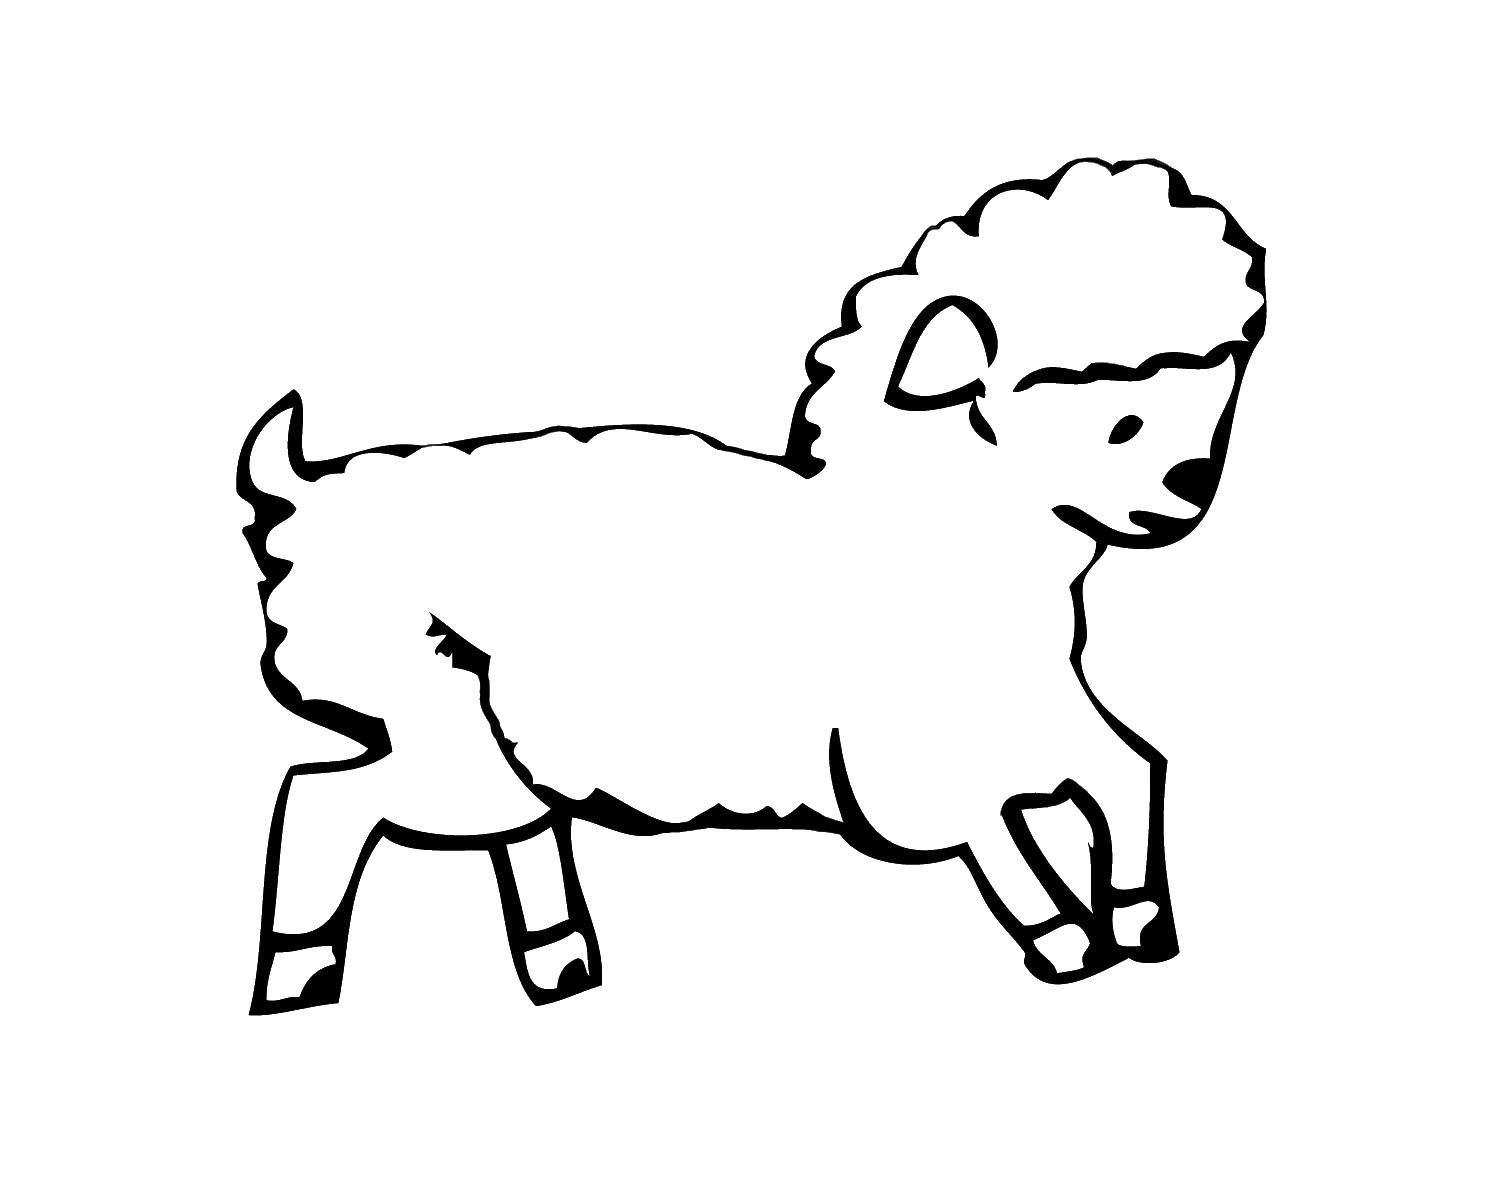 Название: Раскраска Бегущая овечка. Категория: Животные. Теги: Животные, овечка.